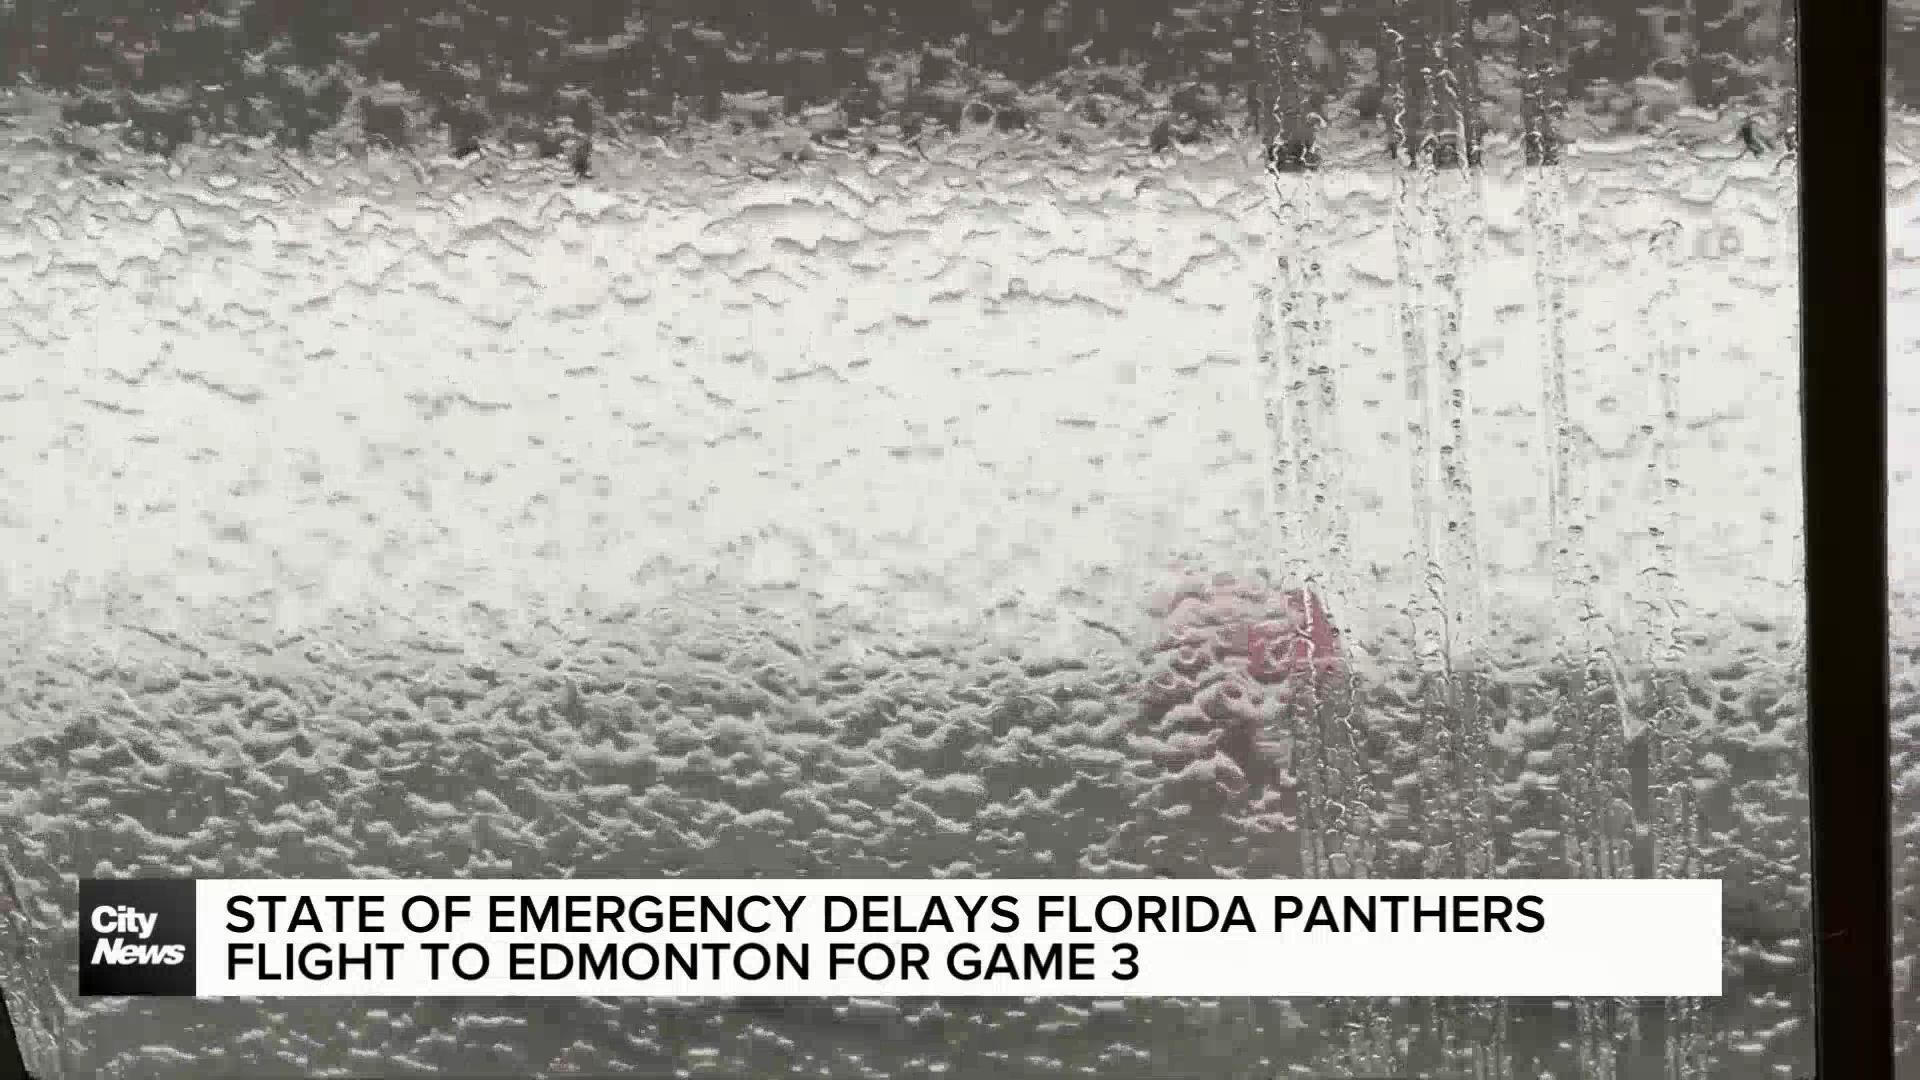 Record rainfall delays Florida Panthers trip to Edmonton